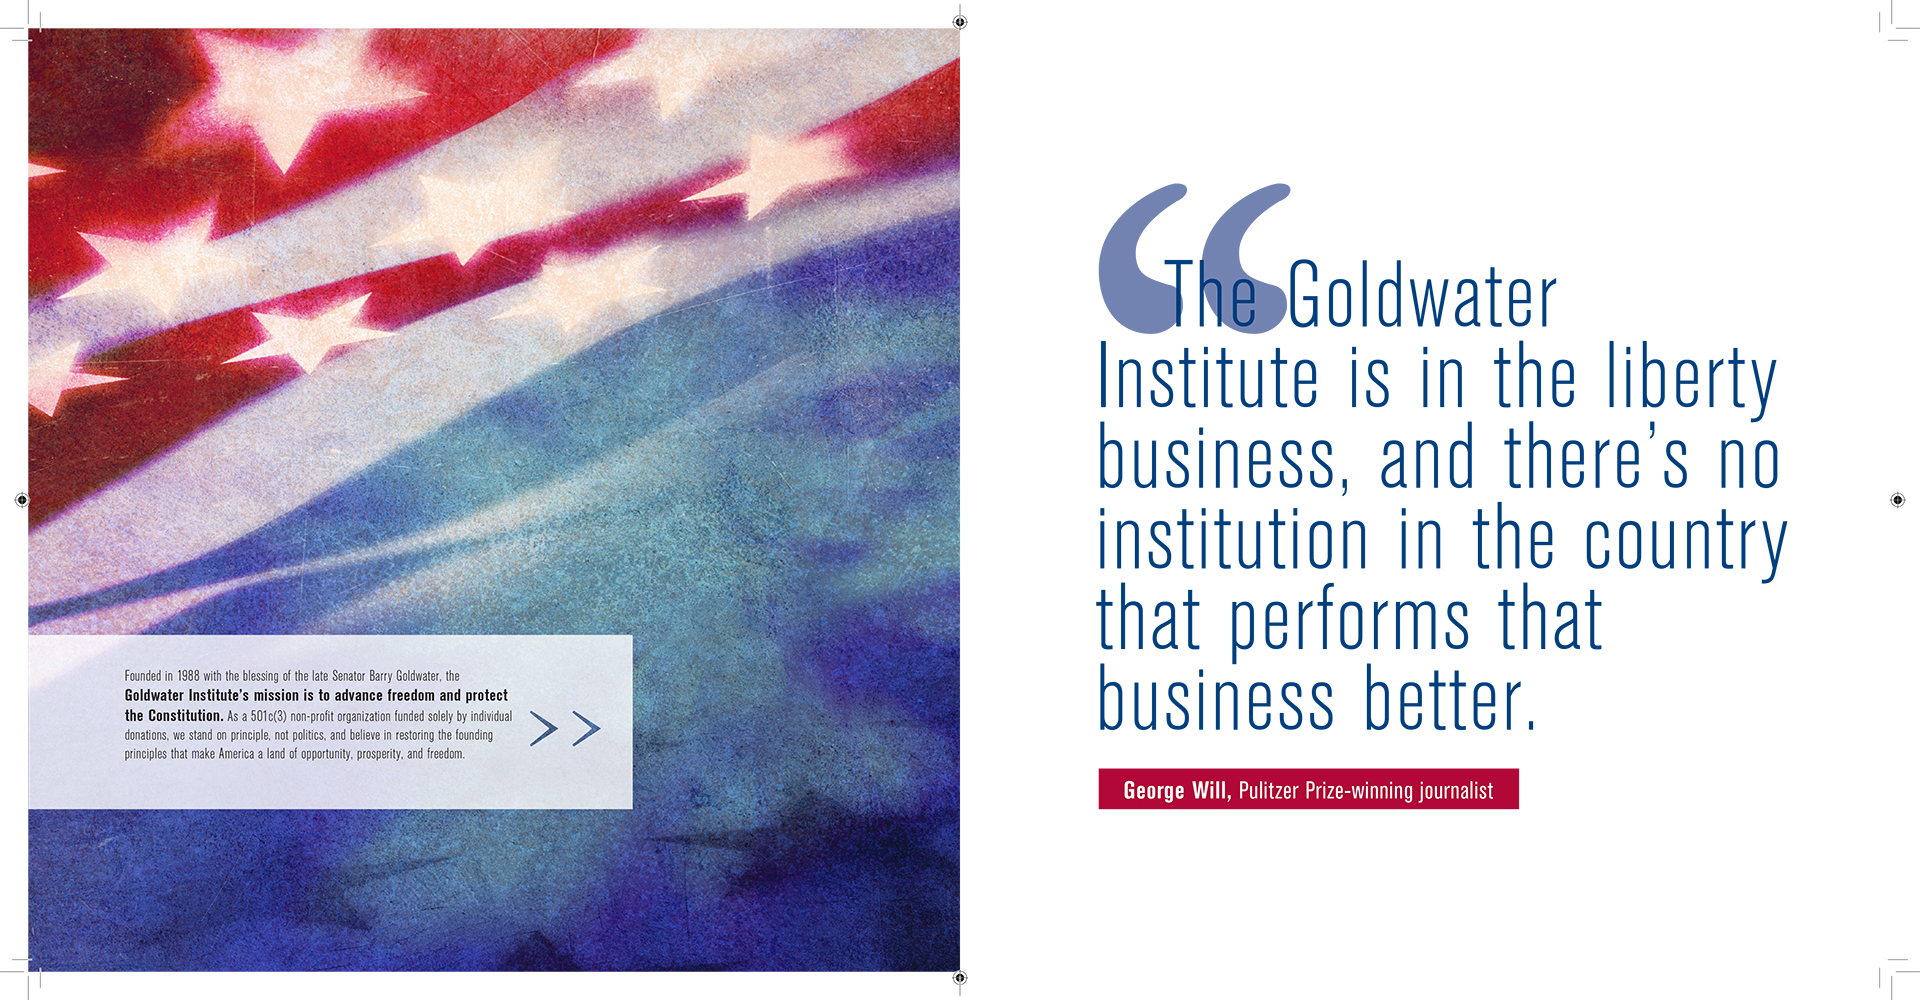 Goldwater Institute Annual Report Design